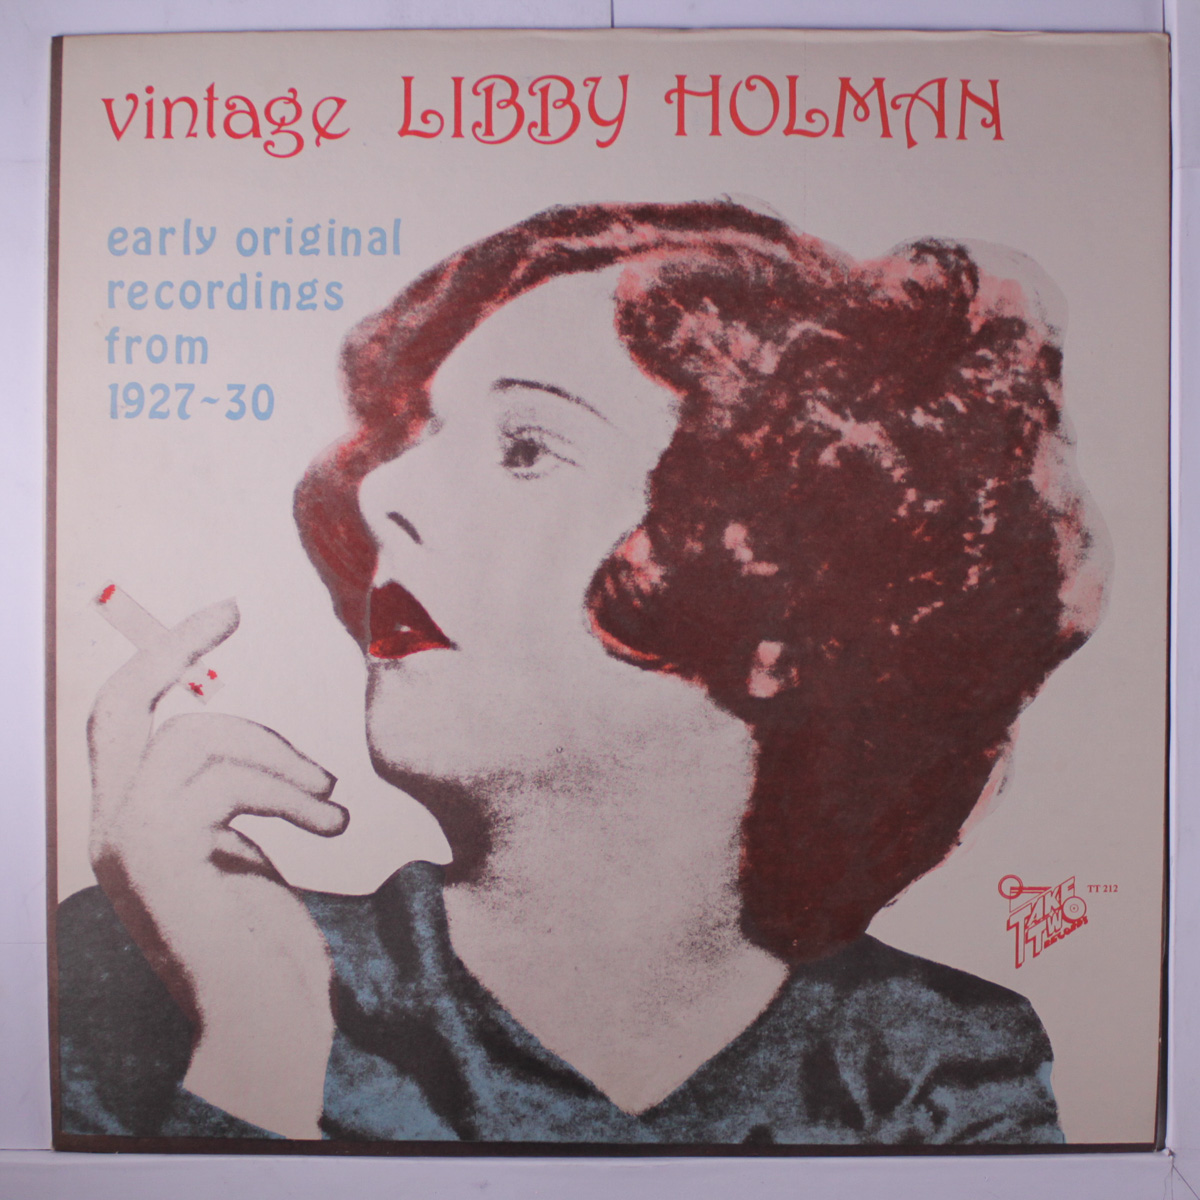 libby-holman-2016